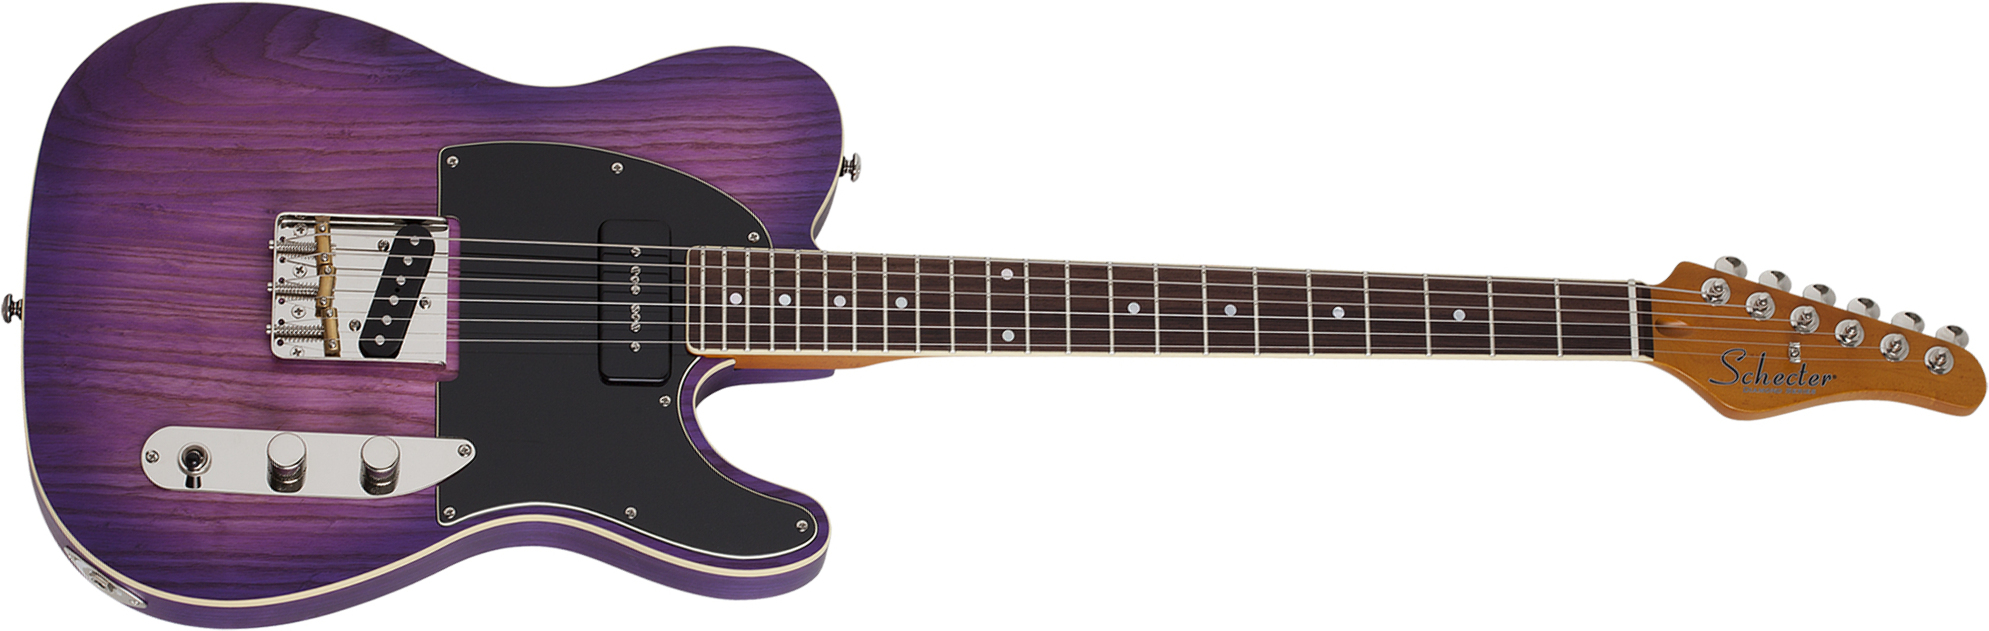 Schecter Pt Special 2s Ht Rw - Purple Burst Pearl - Televorm elektrische gitaar - Main picture